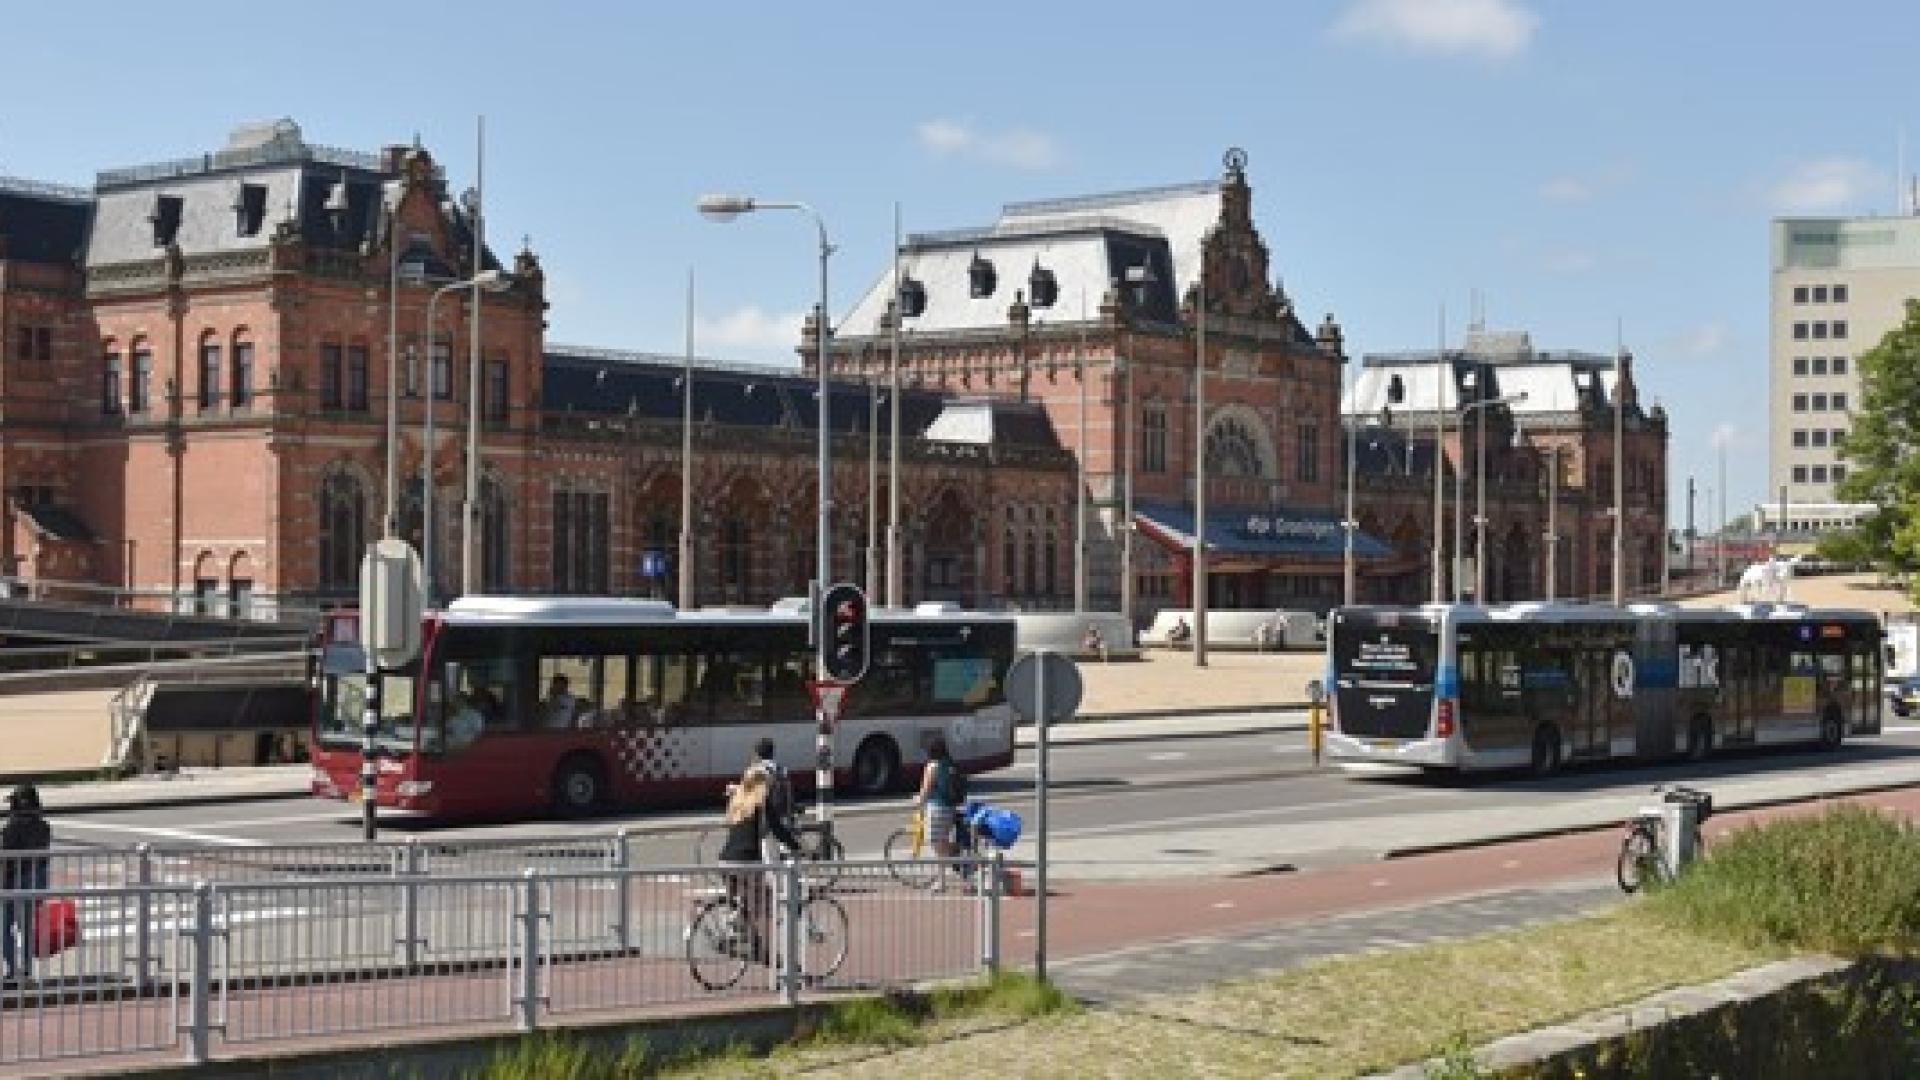 station van Groningen